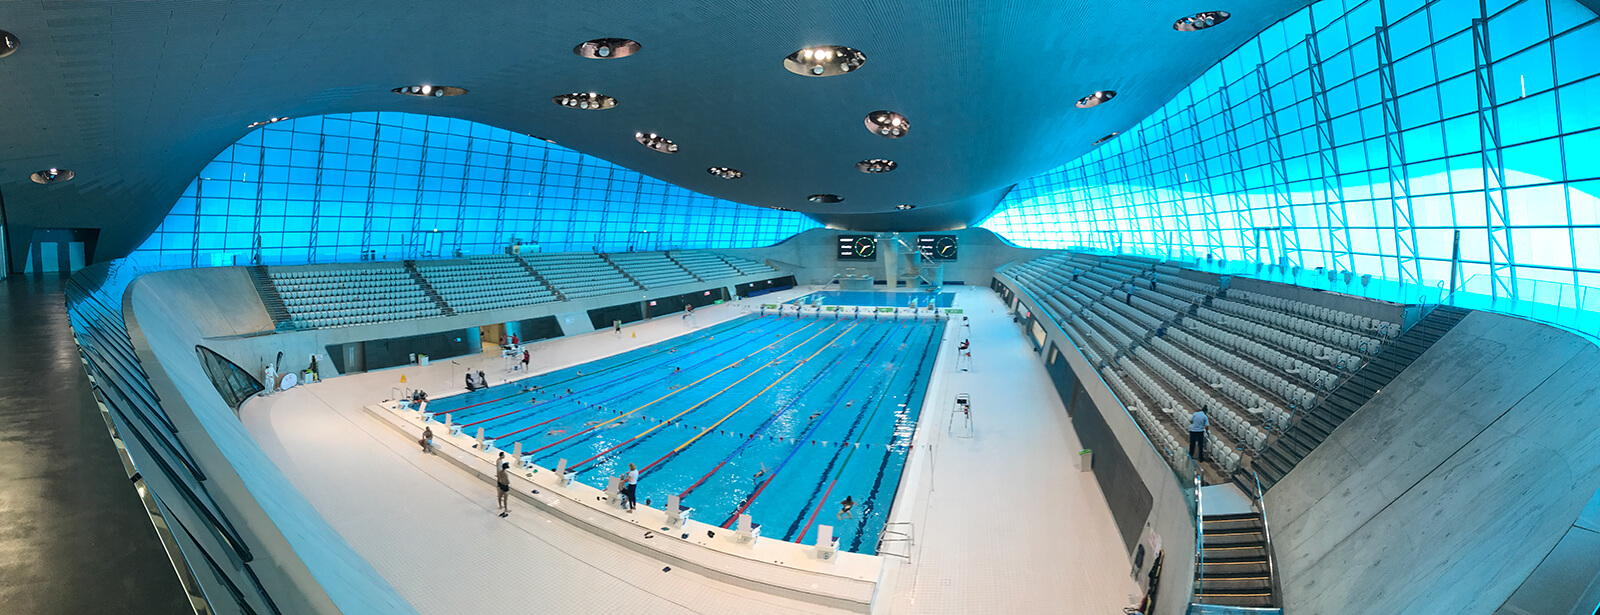 London Aquatics Centre (Competiton pool)